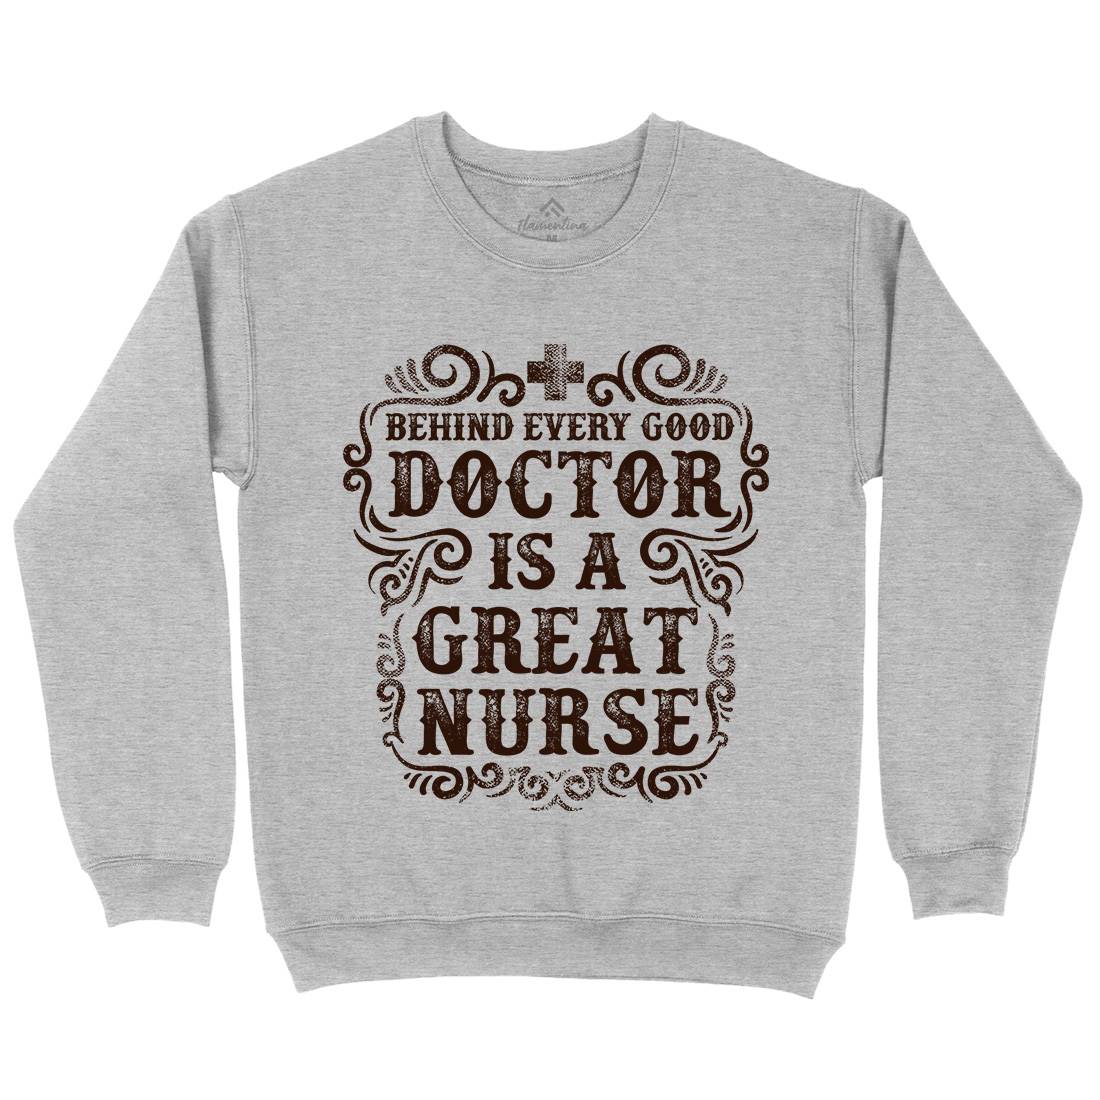 Behind Every Good Doctor Is A Great Nurse Kids Crew Neck Sweatshirt Work C910